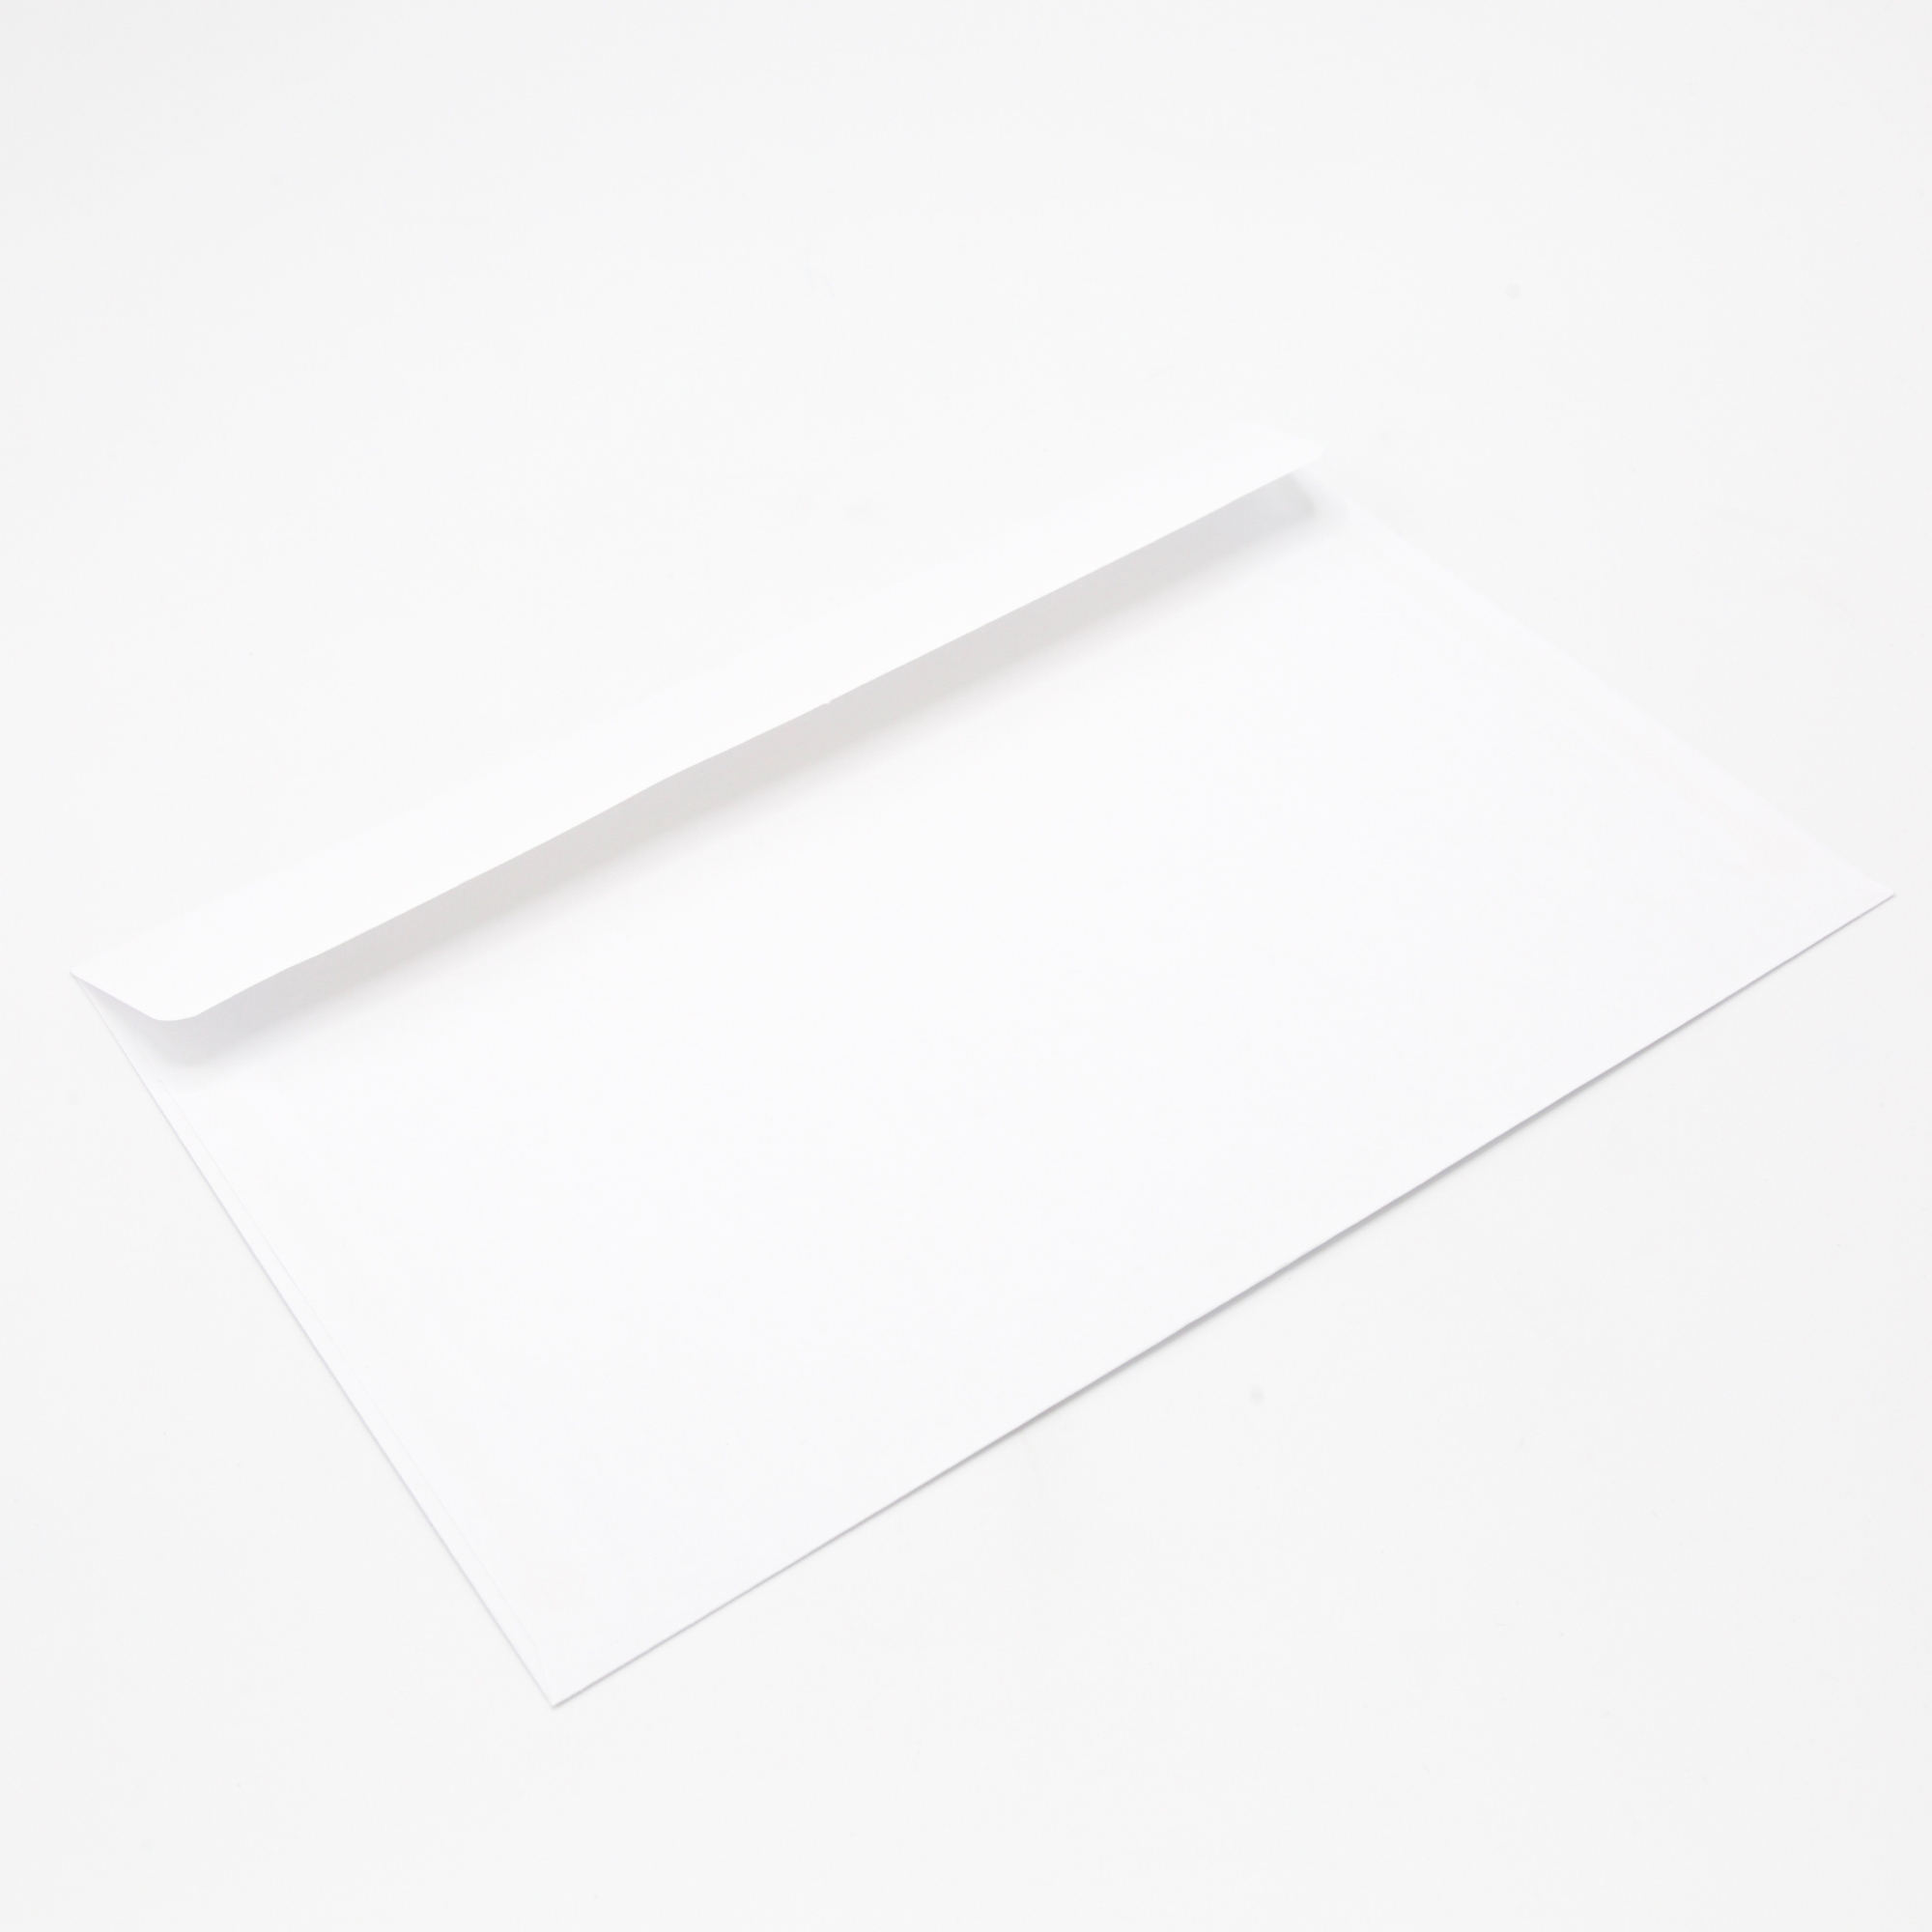 Chip Board 50lb Bundle 11 x 17, Paper, Envelopes, Cardstock & Wide format, Quick shipping nationwide